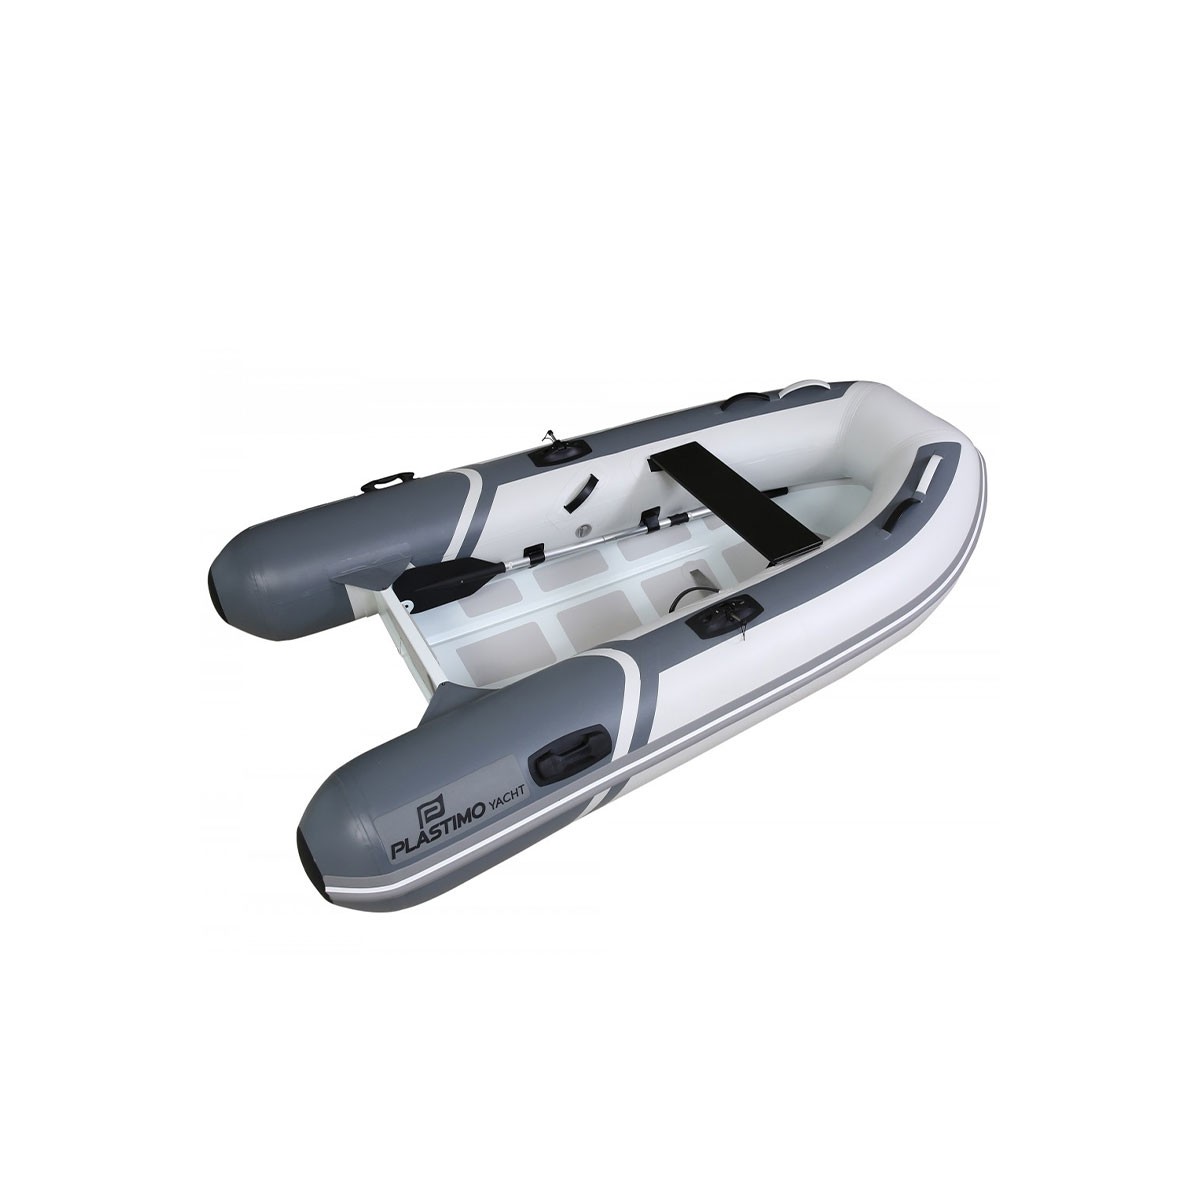 Barco de pesca de aluminio - Bote de aluminio con fondo plano y ligero